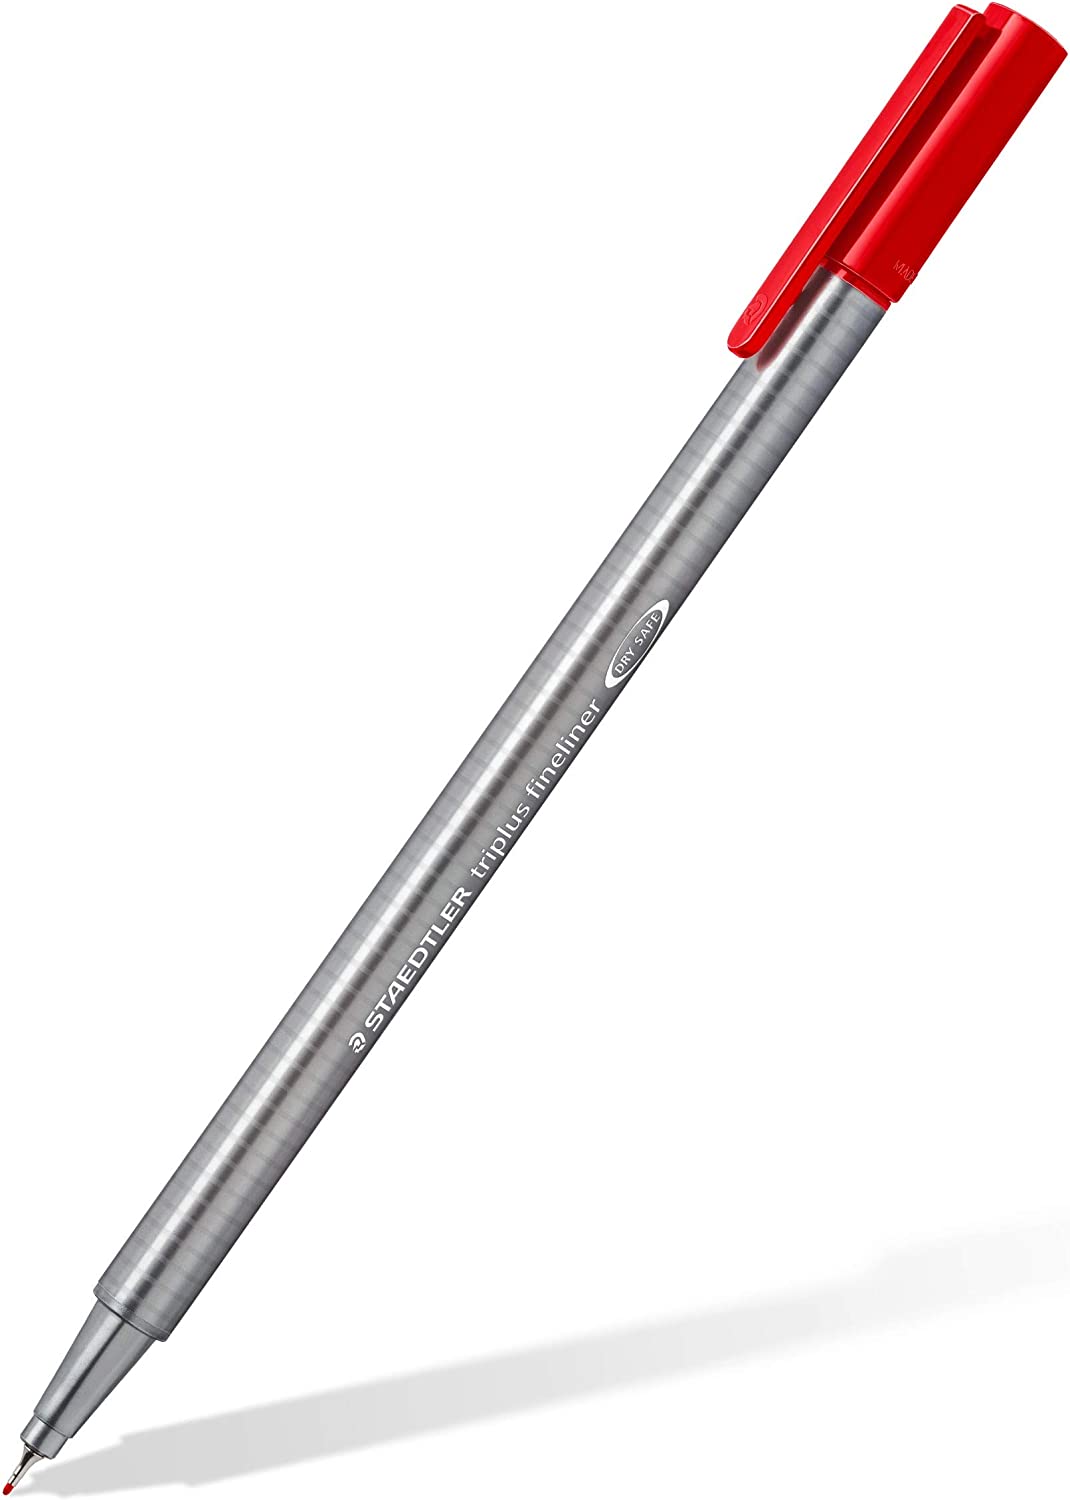 STAEDTLER 334 TB60 Triplus Fineliner Pens single pen